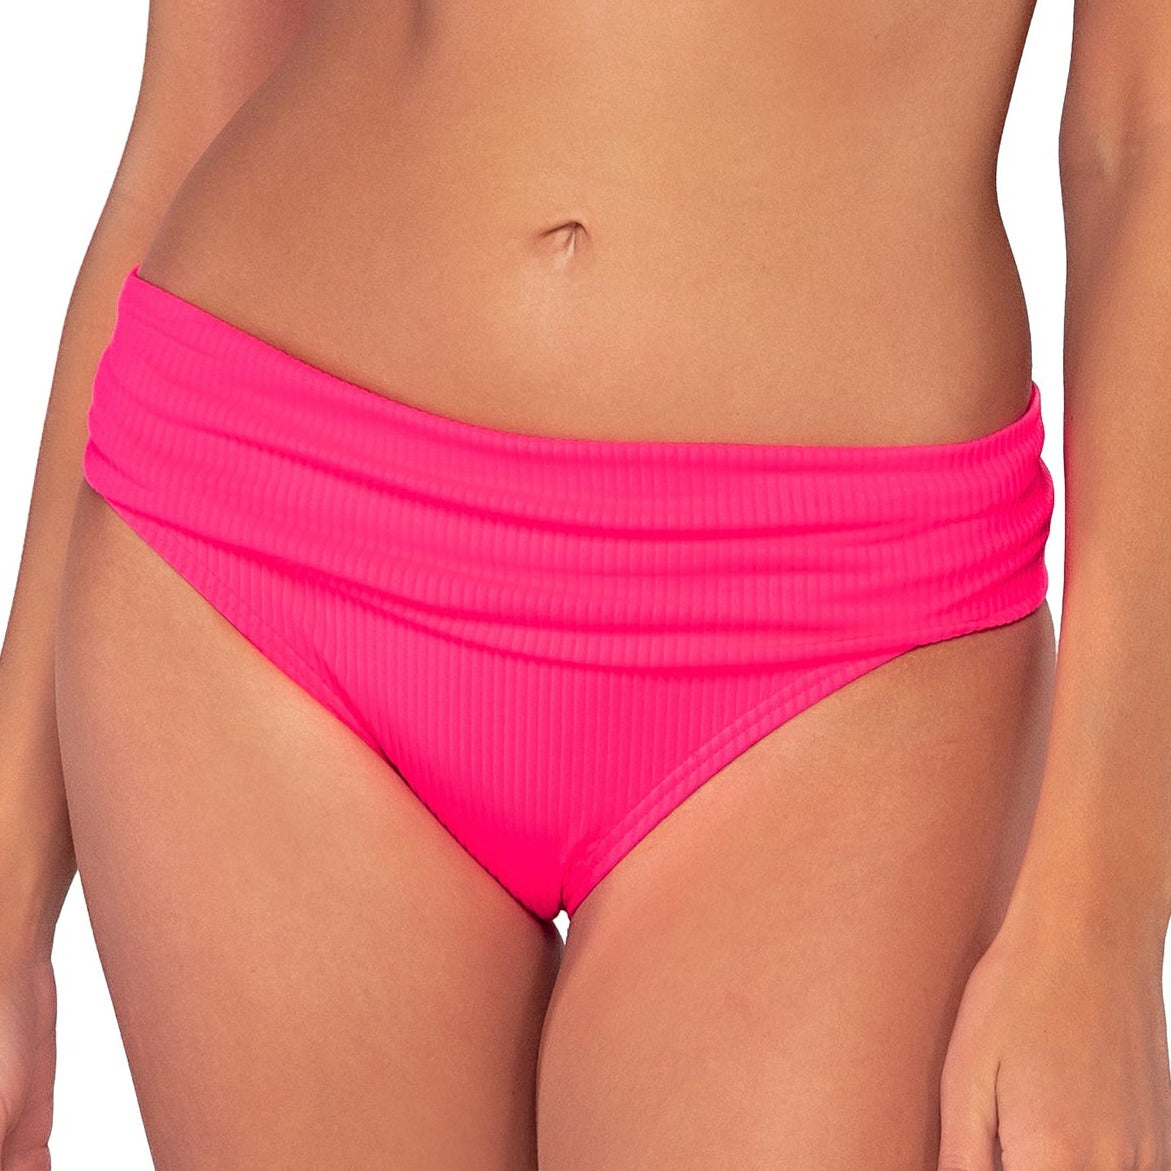 Unforgettable Bikini Bottom - 27B - Neon Pink Swim - Bottoms - Bikini Sunsets, Inc. PINK S 